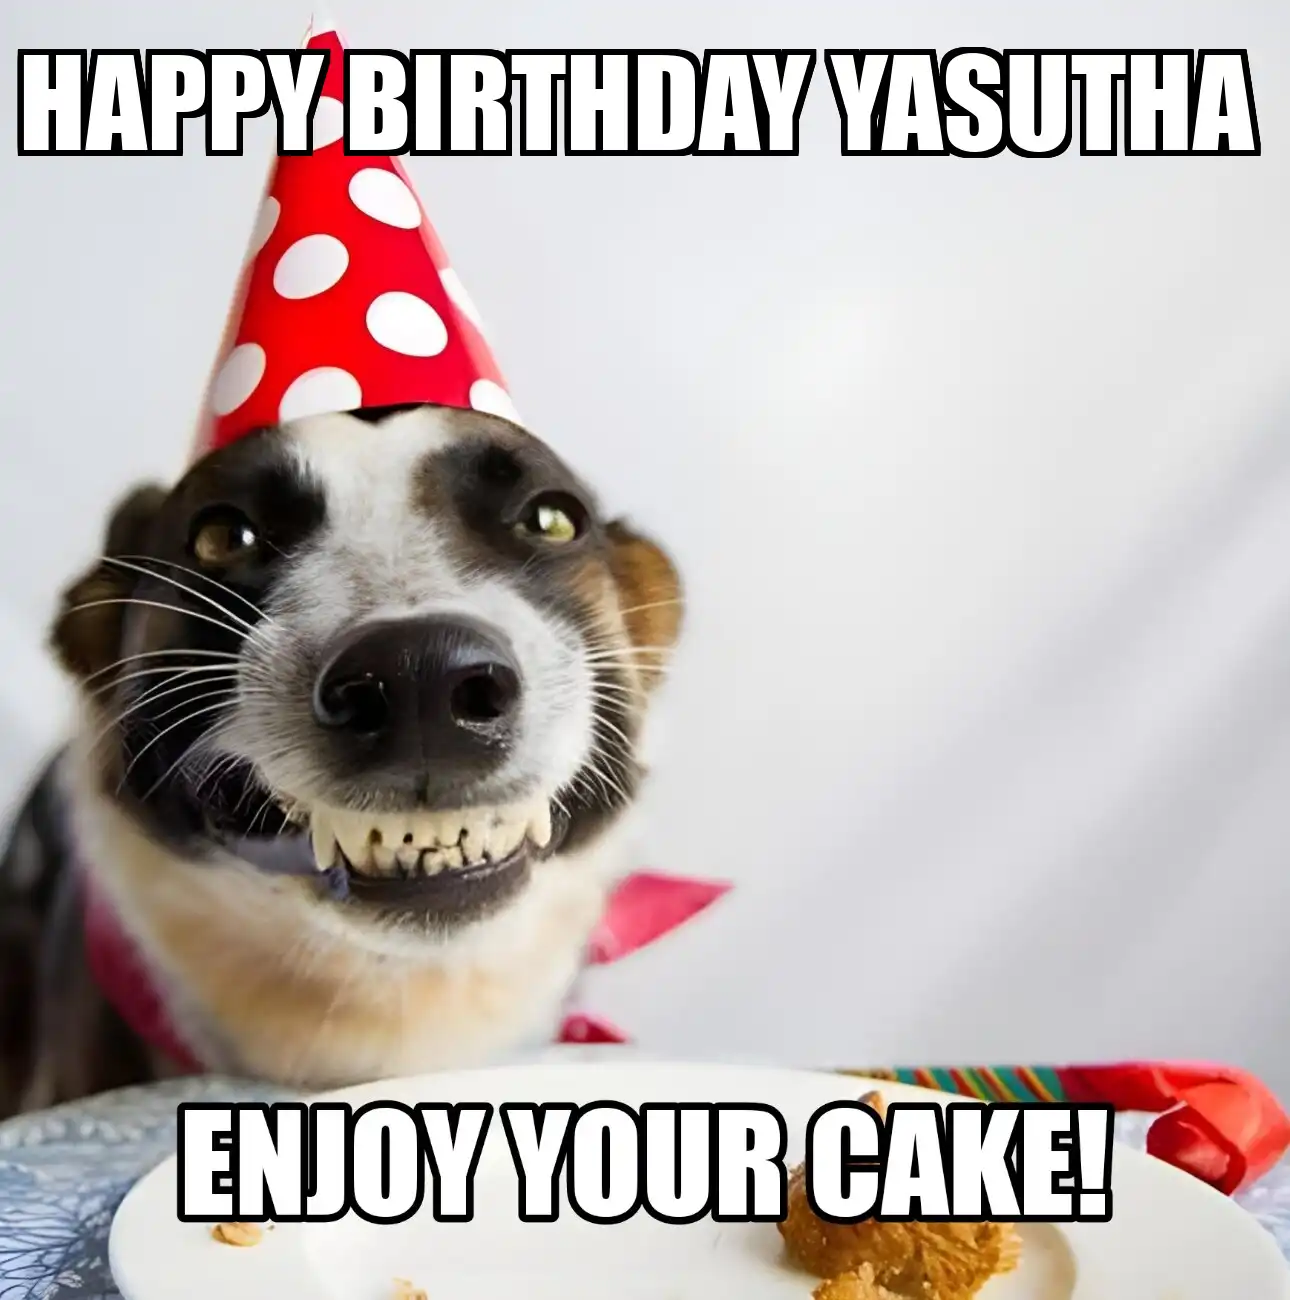 Happy Birthday Yasutha Enjoy Your Cake Dog Meme